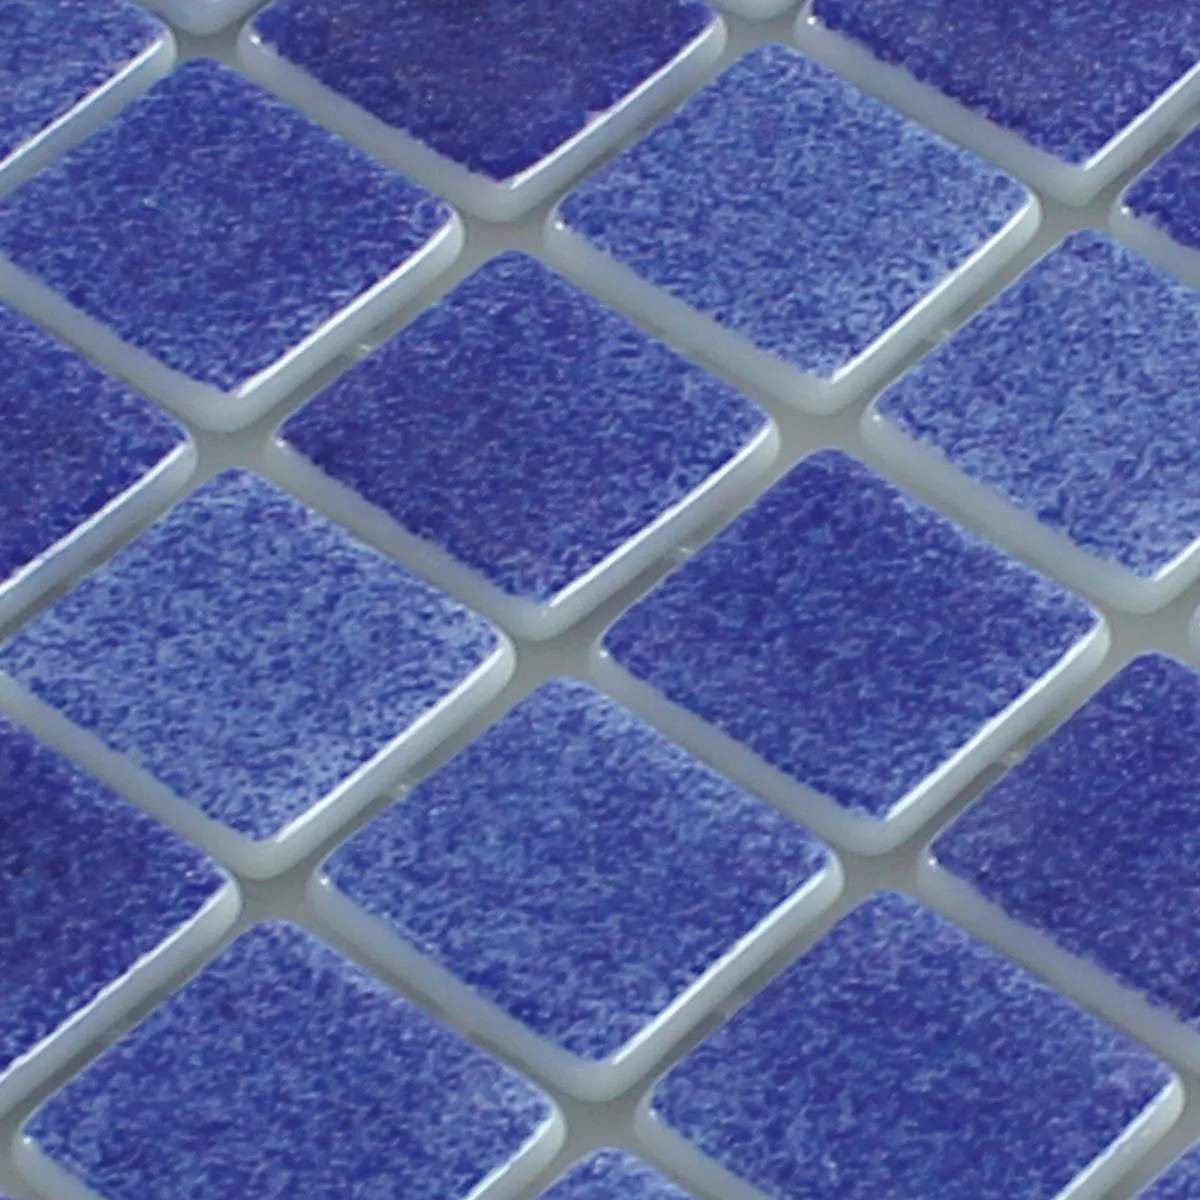 Sample Glass Swimming Pool Mosaic Antonio Dark Blue